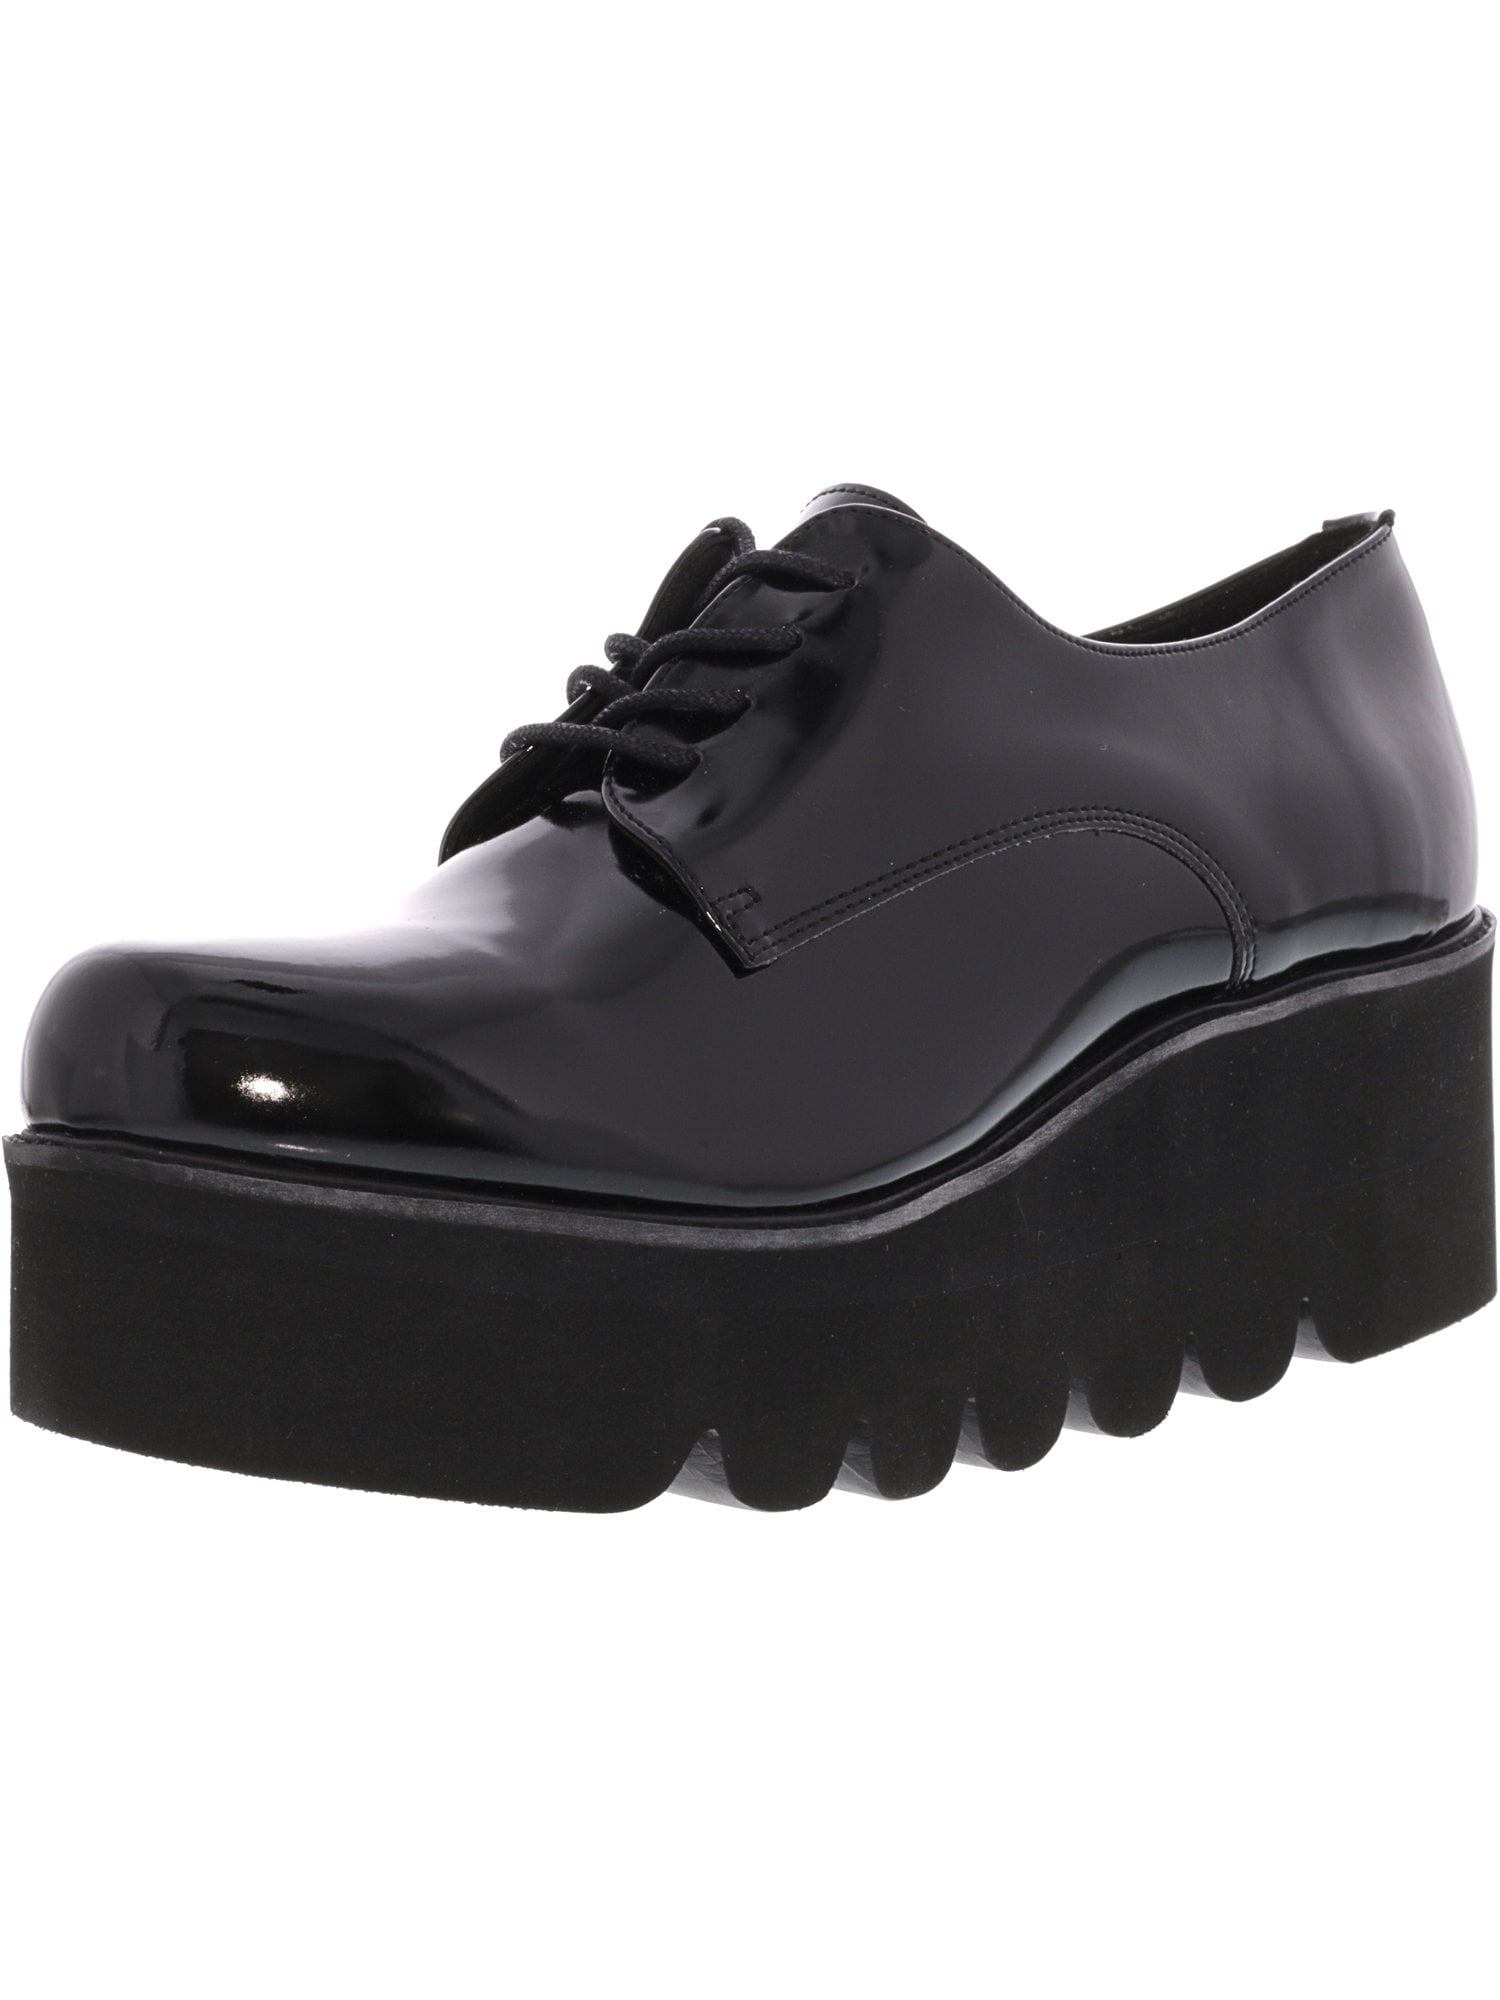 Steve Madden Women's Shaylaa Black Ankle-High Oxford Shoe - 9M ...